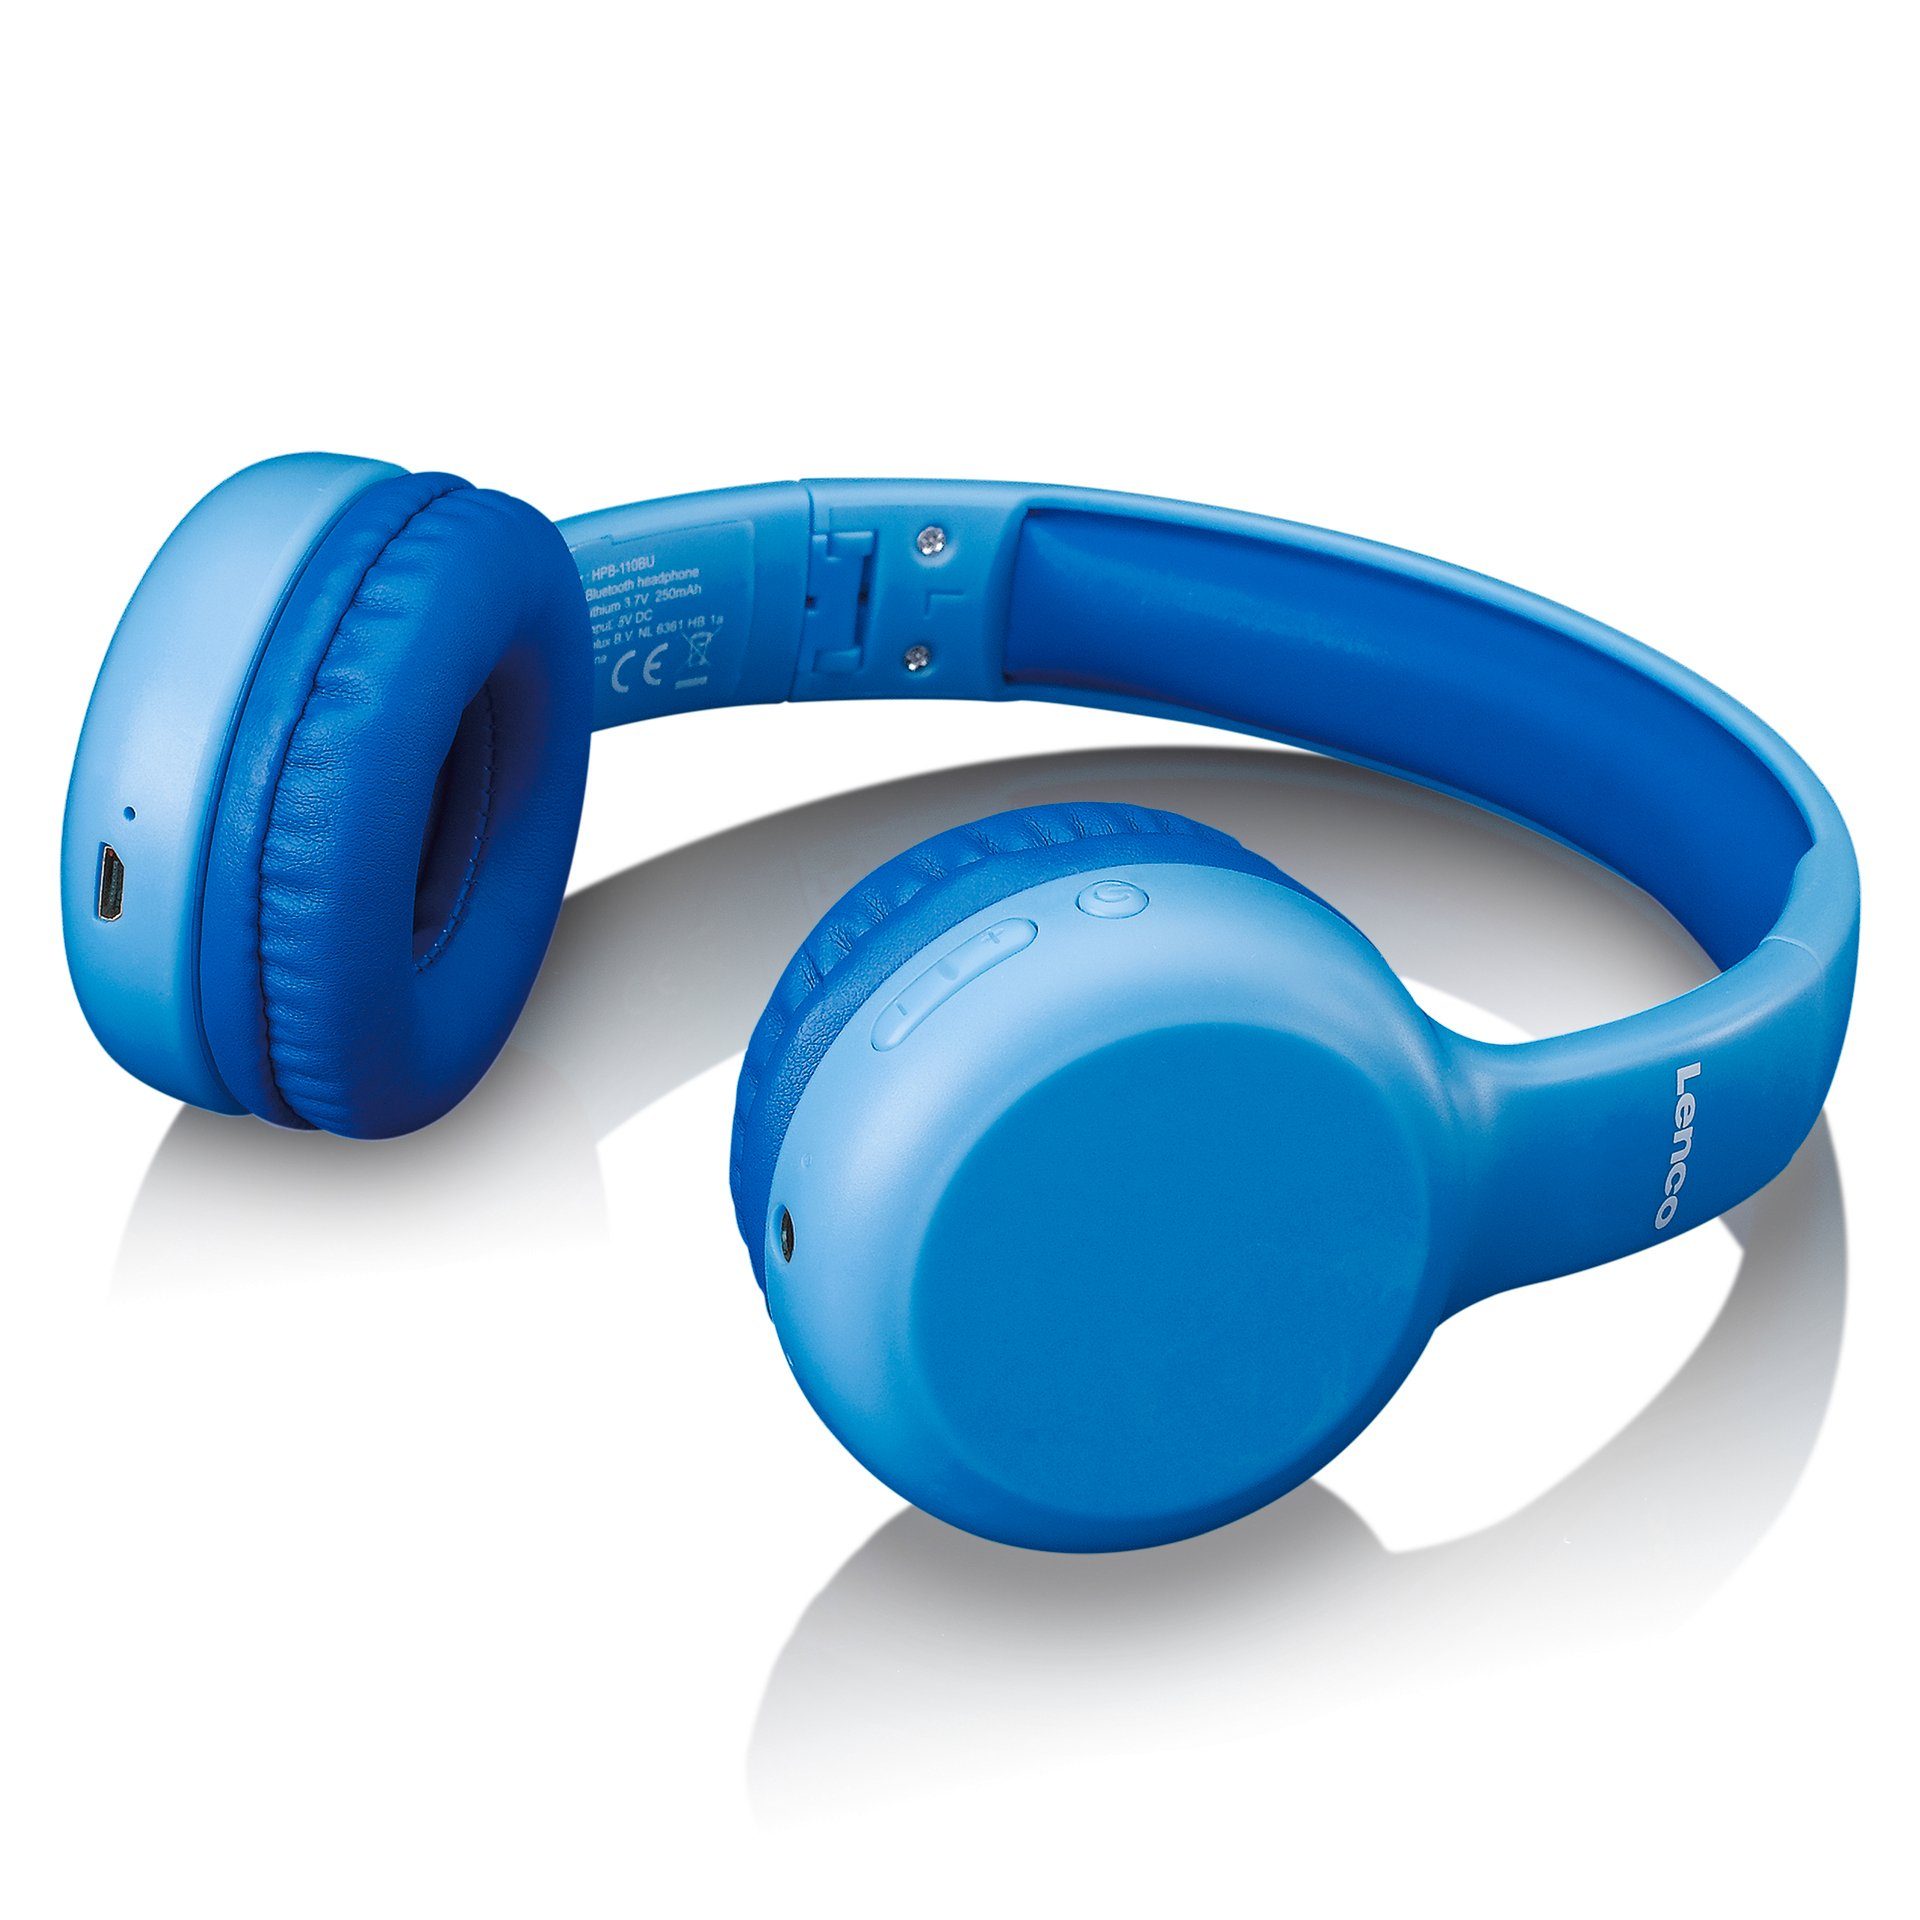 Lenco HPB-110 Over-Ear-Kopfhörer mit Kinderkopfhörer Sticker Blau